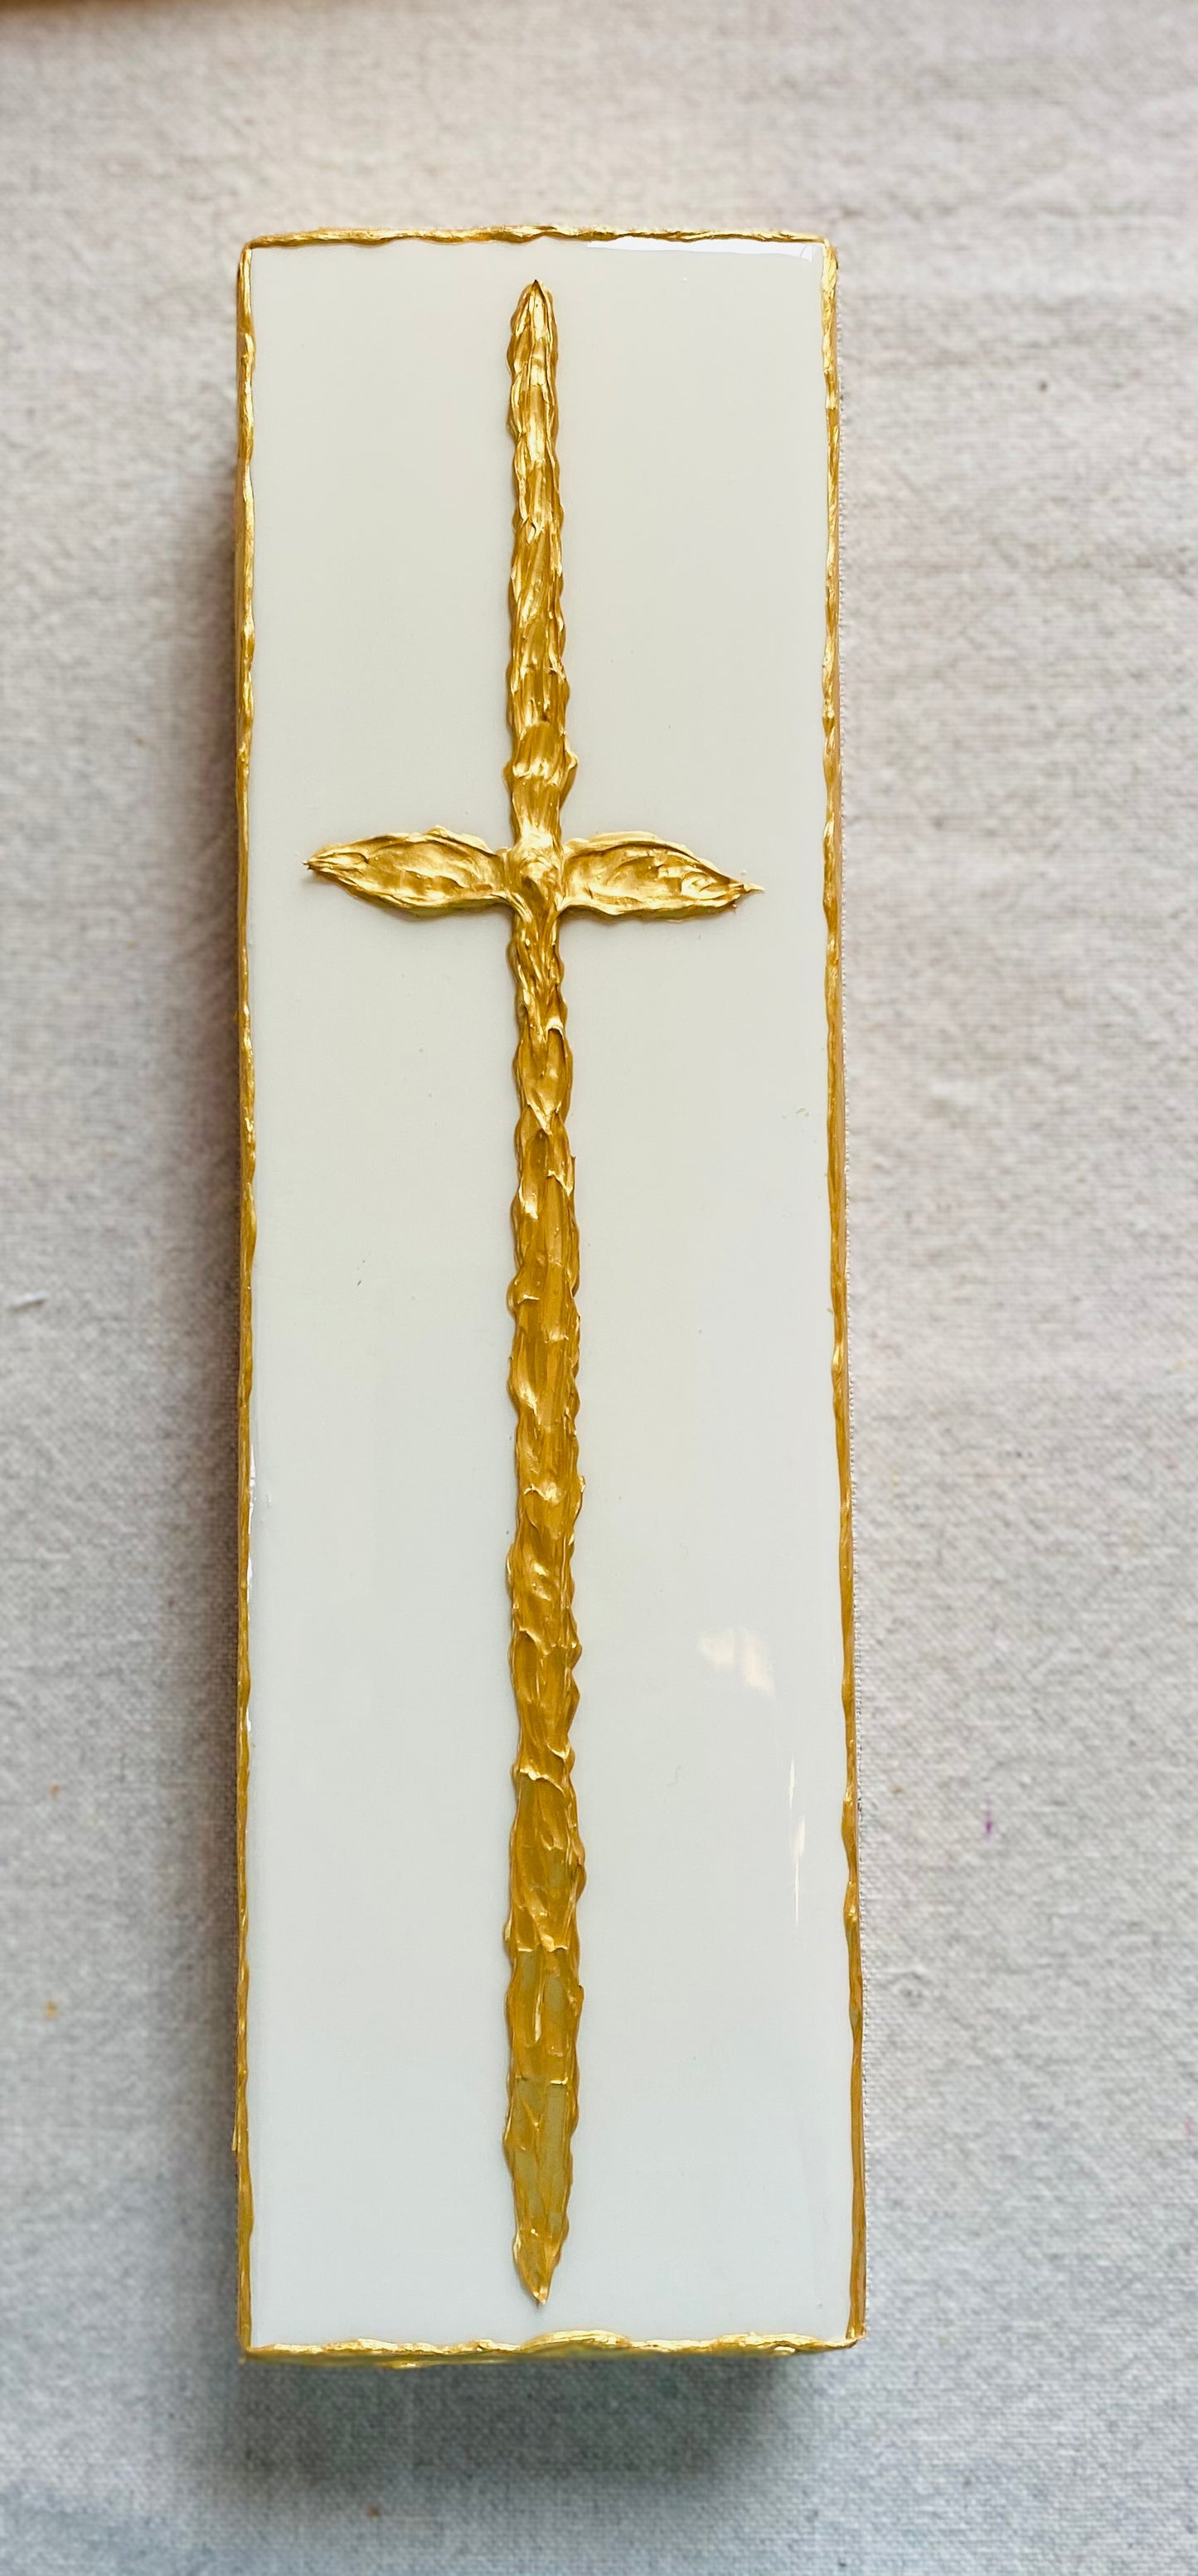 Gold Cross on Wood